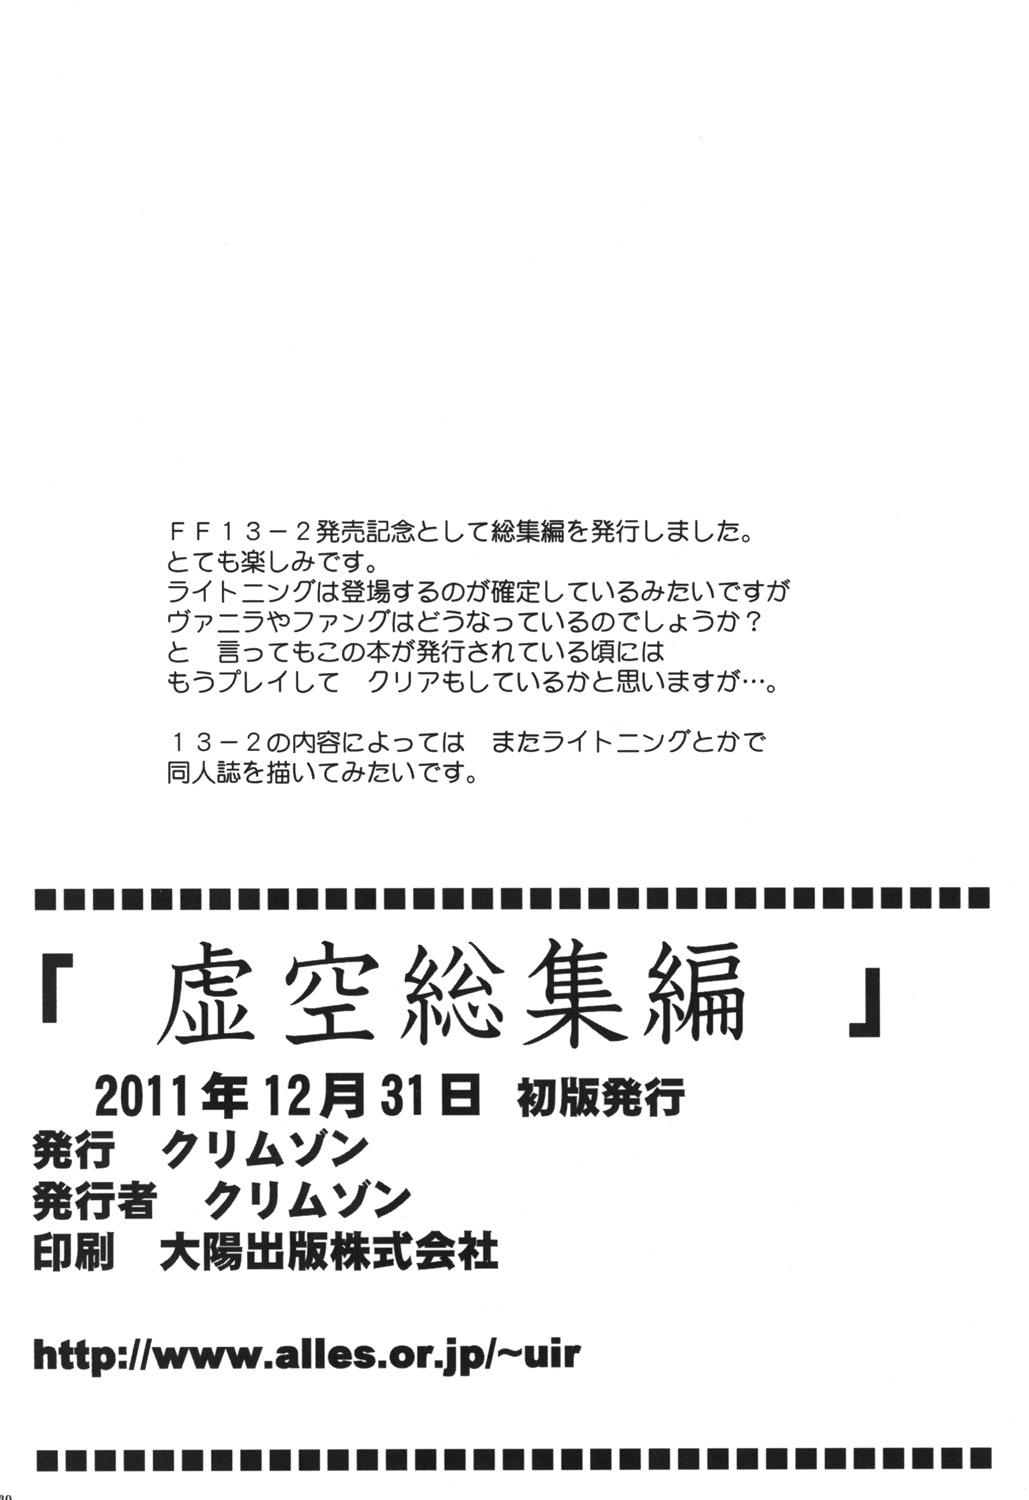 Adult Toys Watashi wa Kaware te i ta - Final fantasy xiii American - Page 46